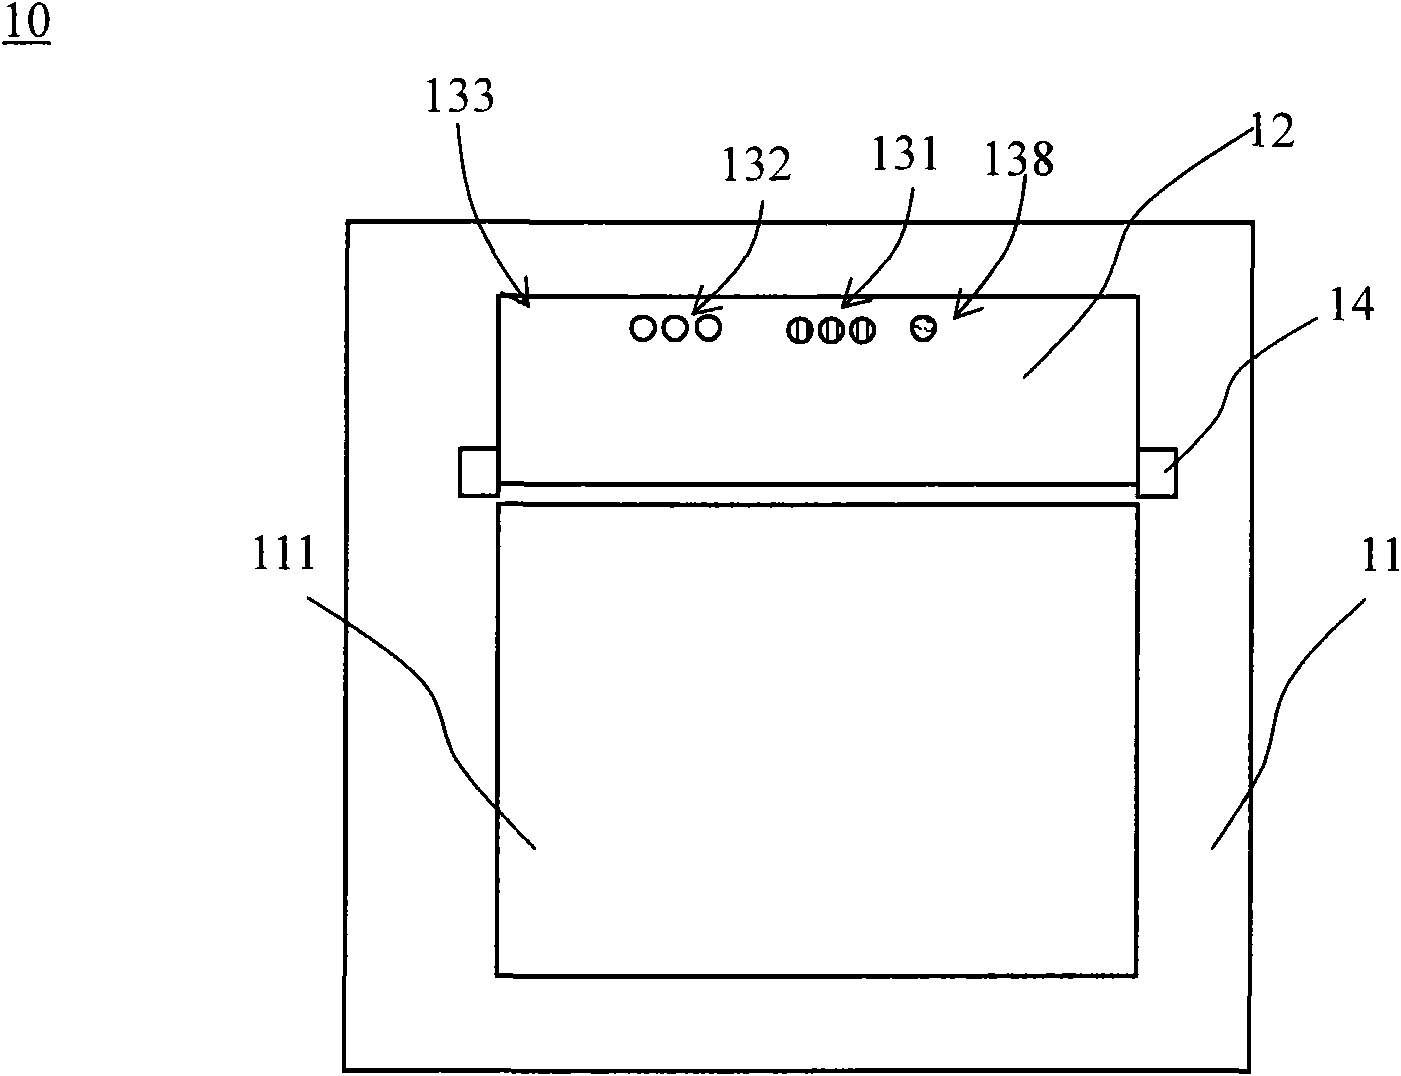 Testing device of display panel